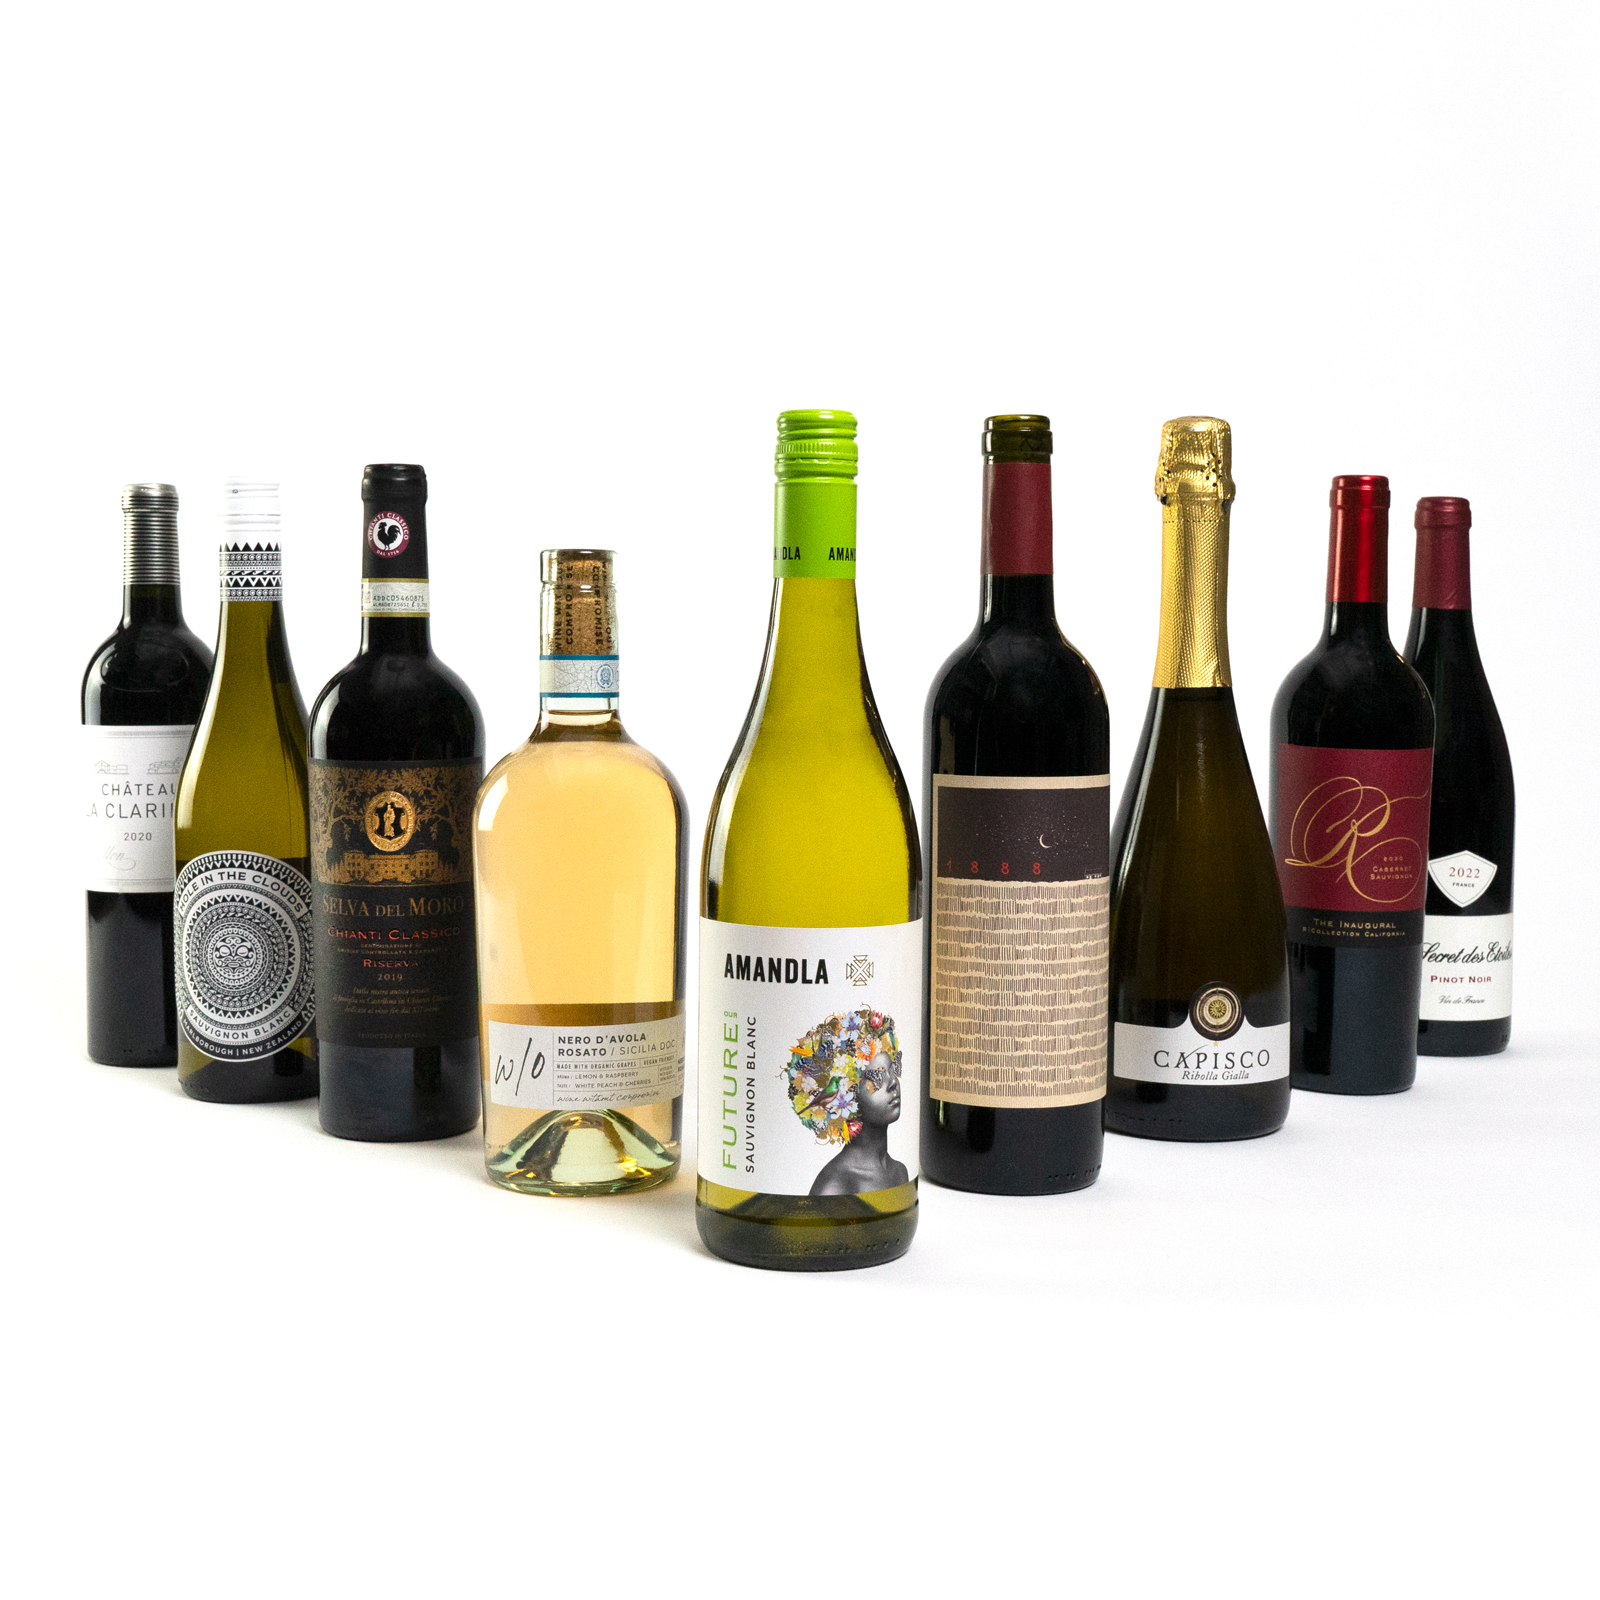 9 bottles of red, white, and rose (LAITHWAITES)ᴿᴱᴰ wine lined up on a white background